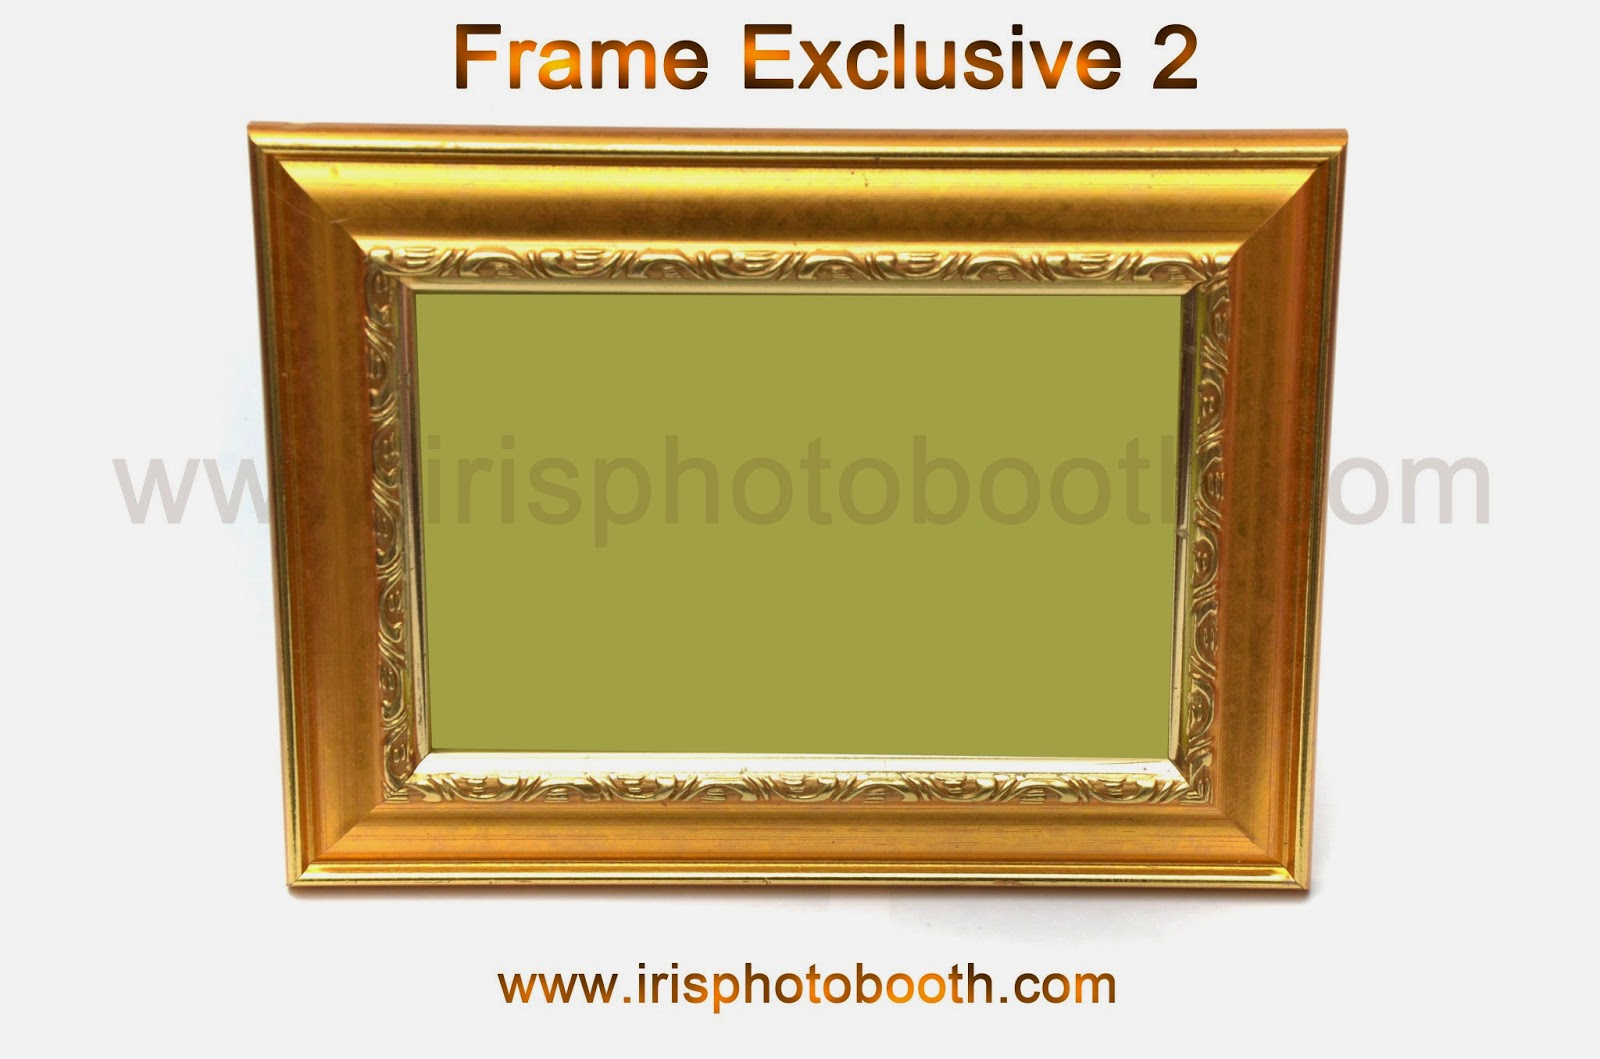 Frame Exclusive - IRIS PhotoBooth Jasa Photo Booth 